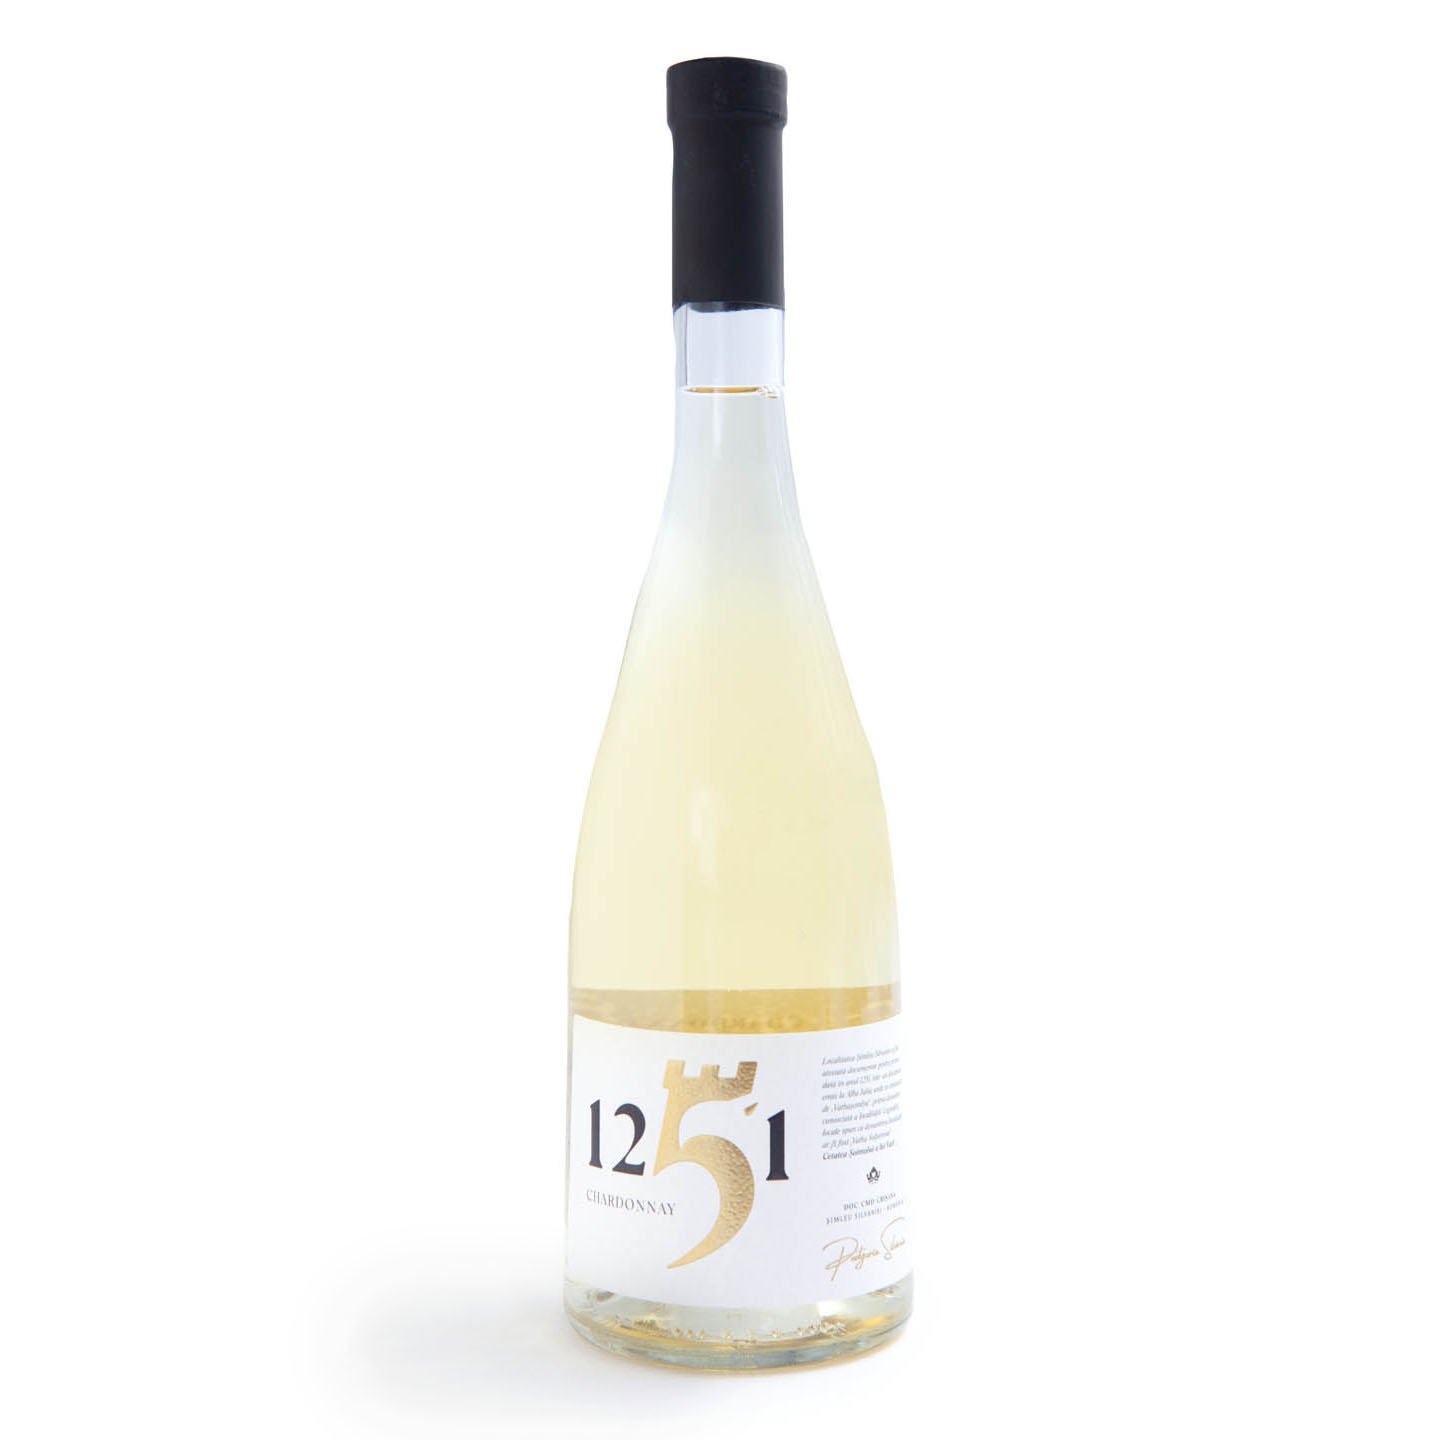 Vin Chardonnay Podgoria Silvania 1251 0.75L